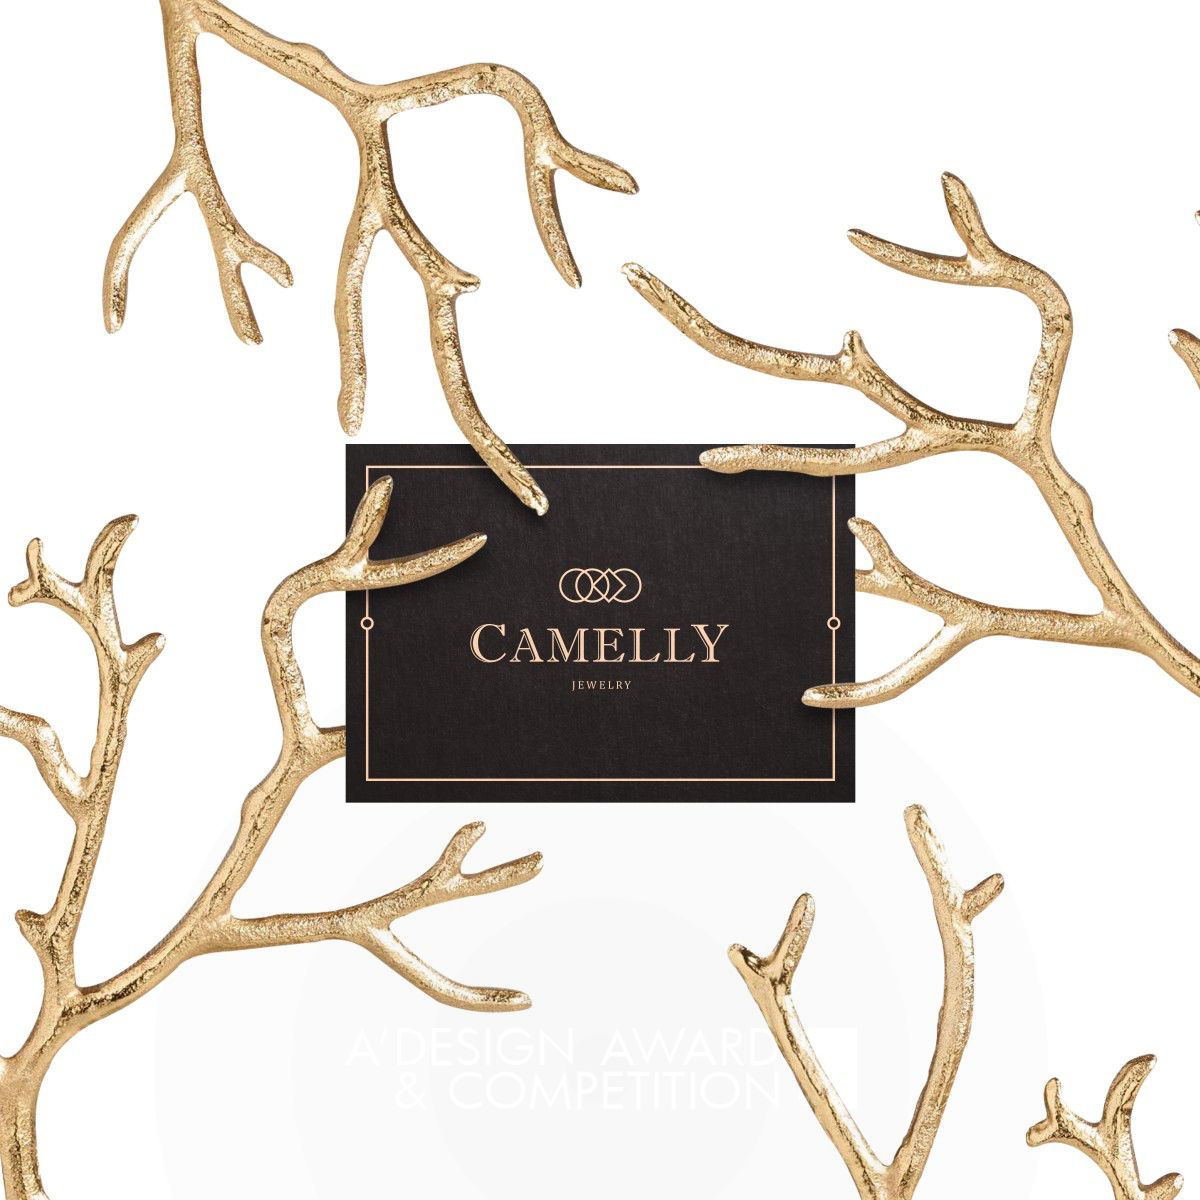 Camelly Jewelry <b>Jewelry branding